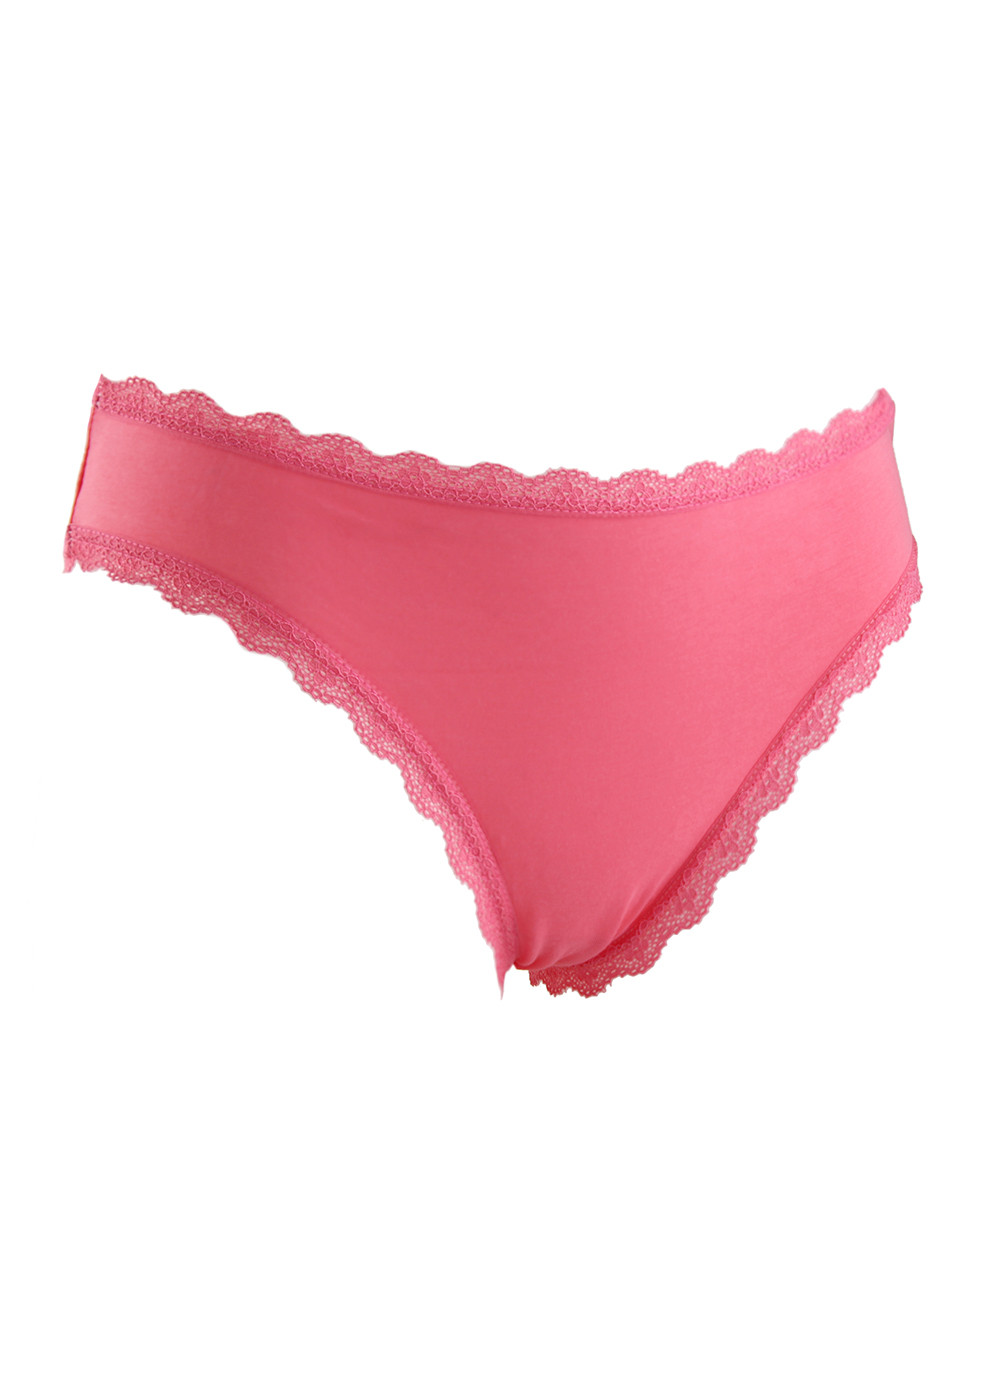 Трусики-сліп Slips X2 Femme 2-pack L coral/pink Manoukian (259296224)